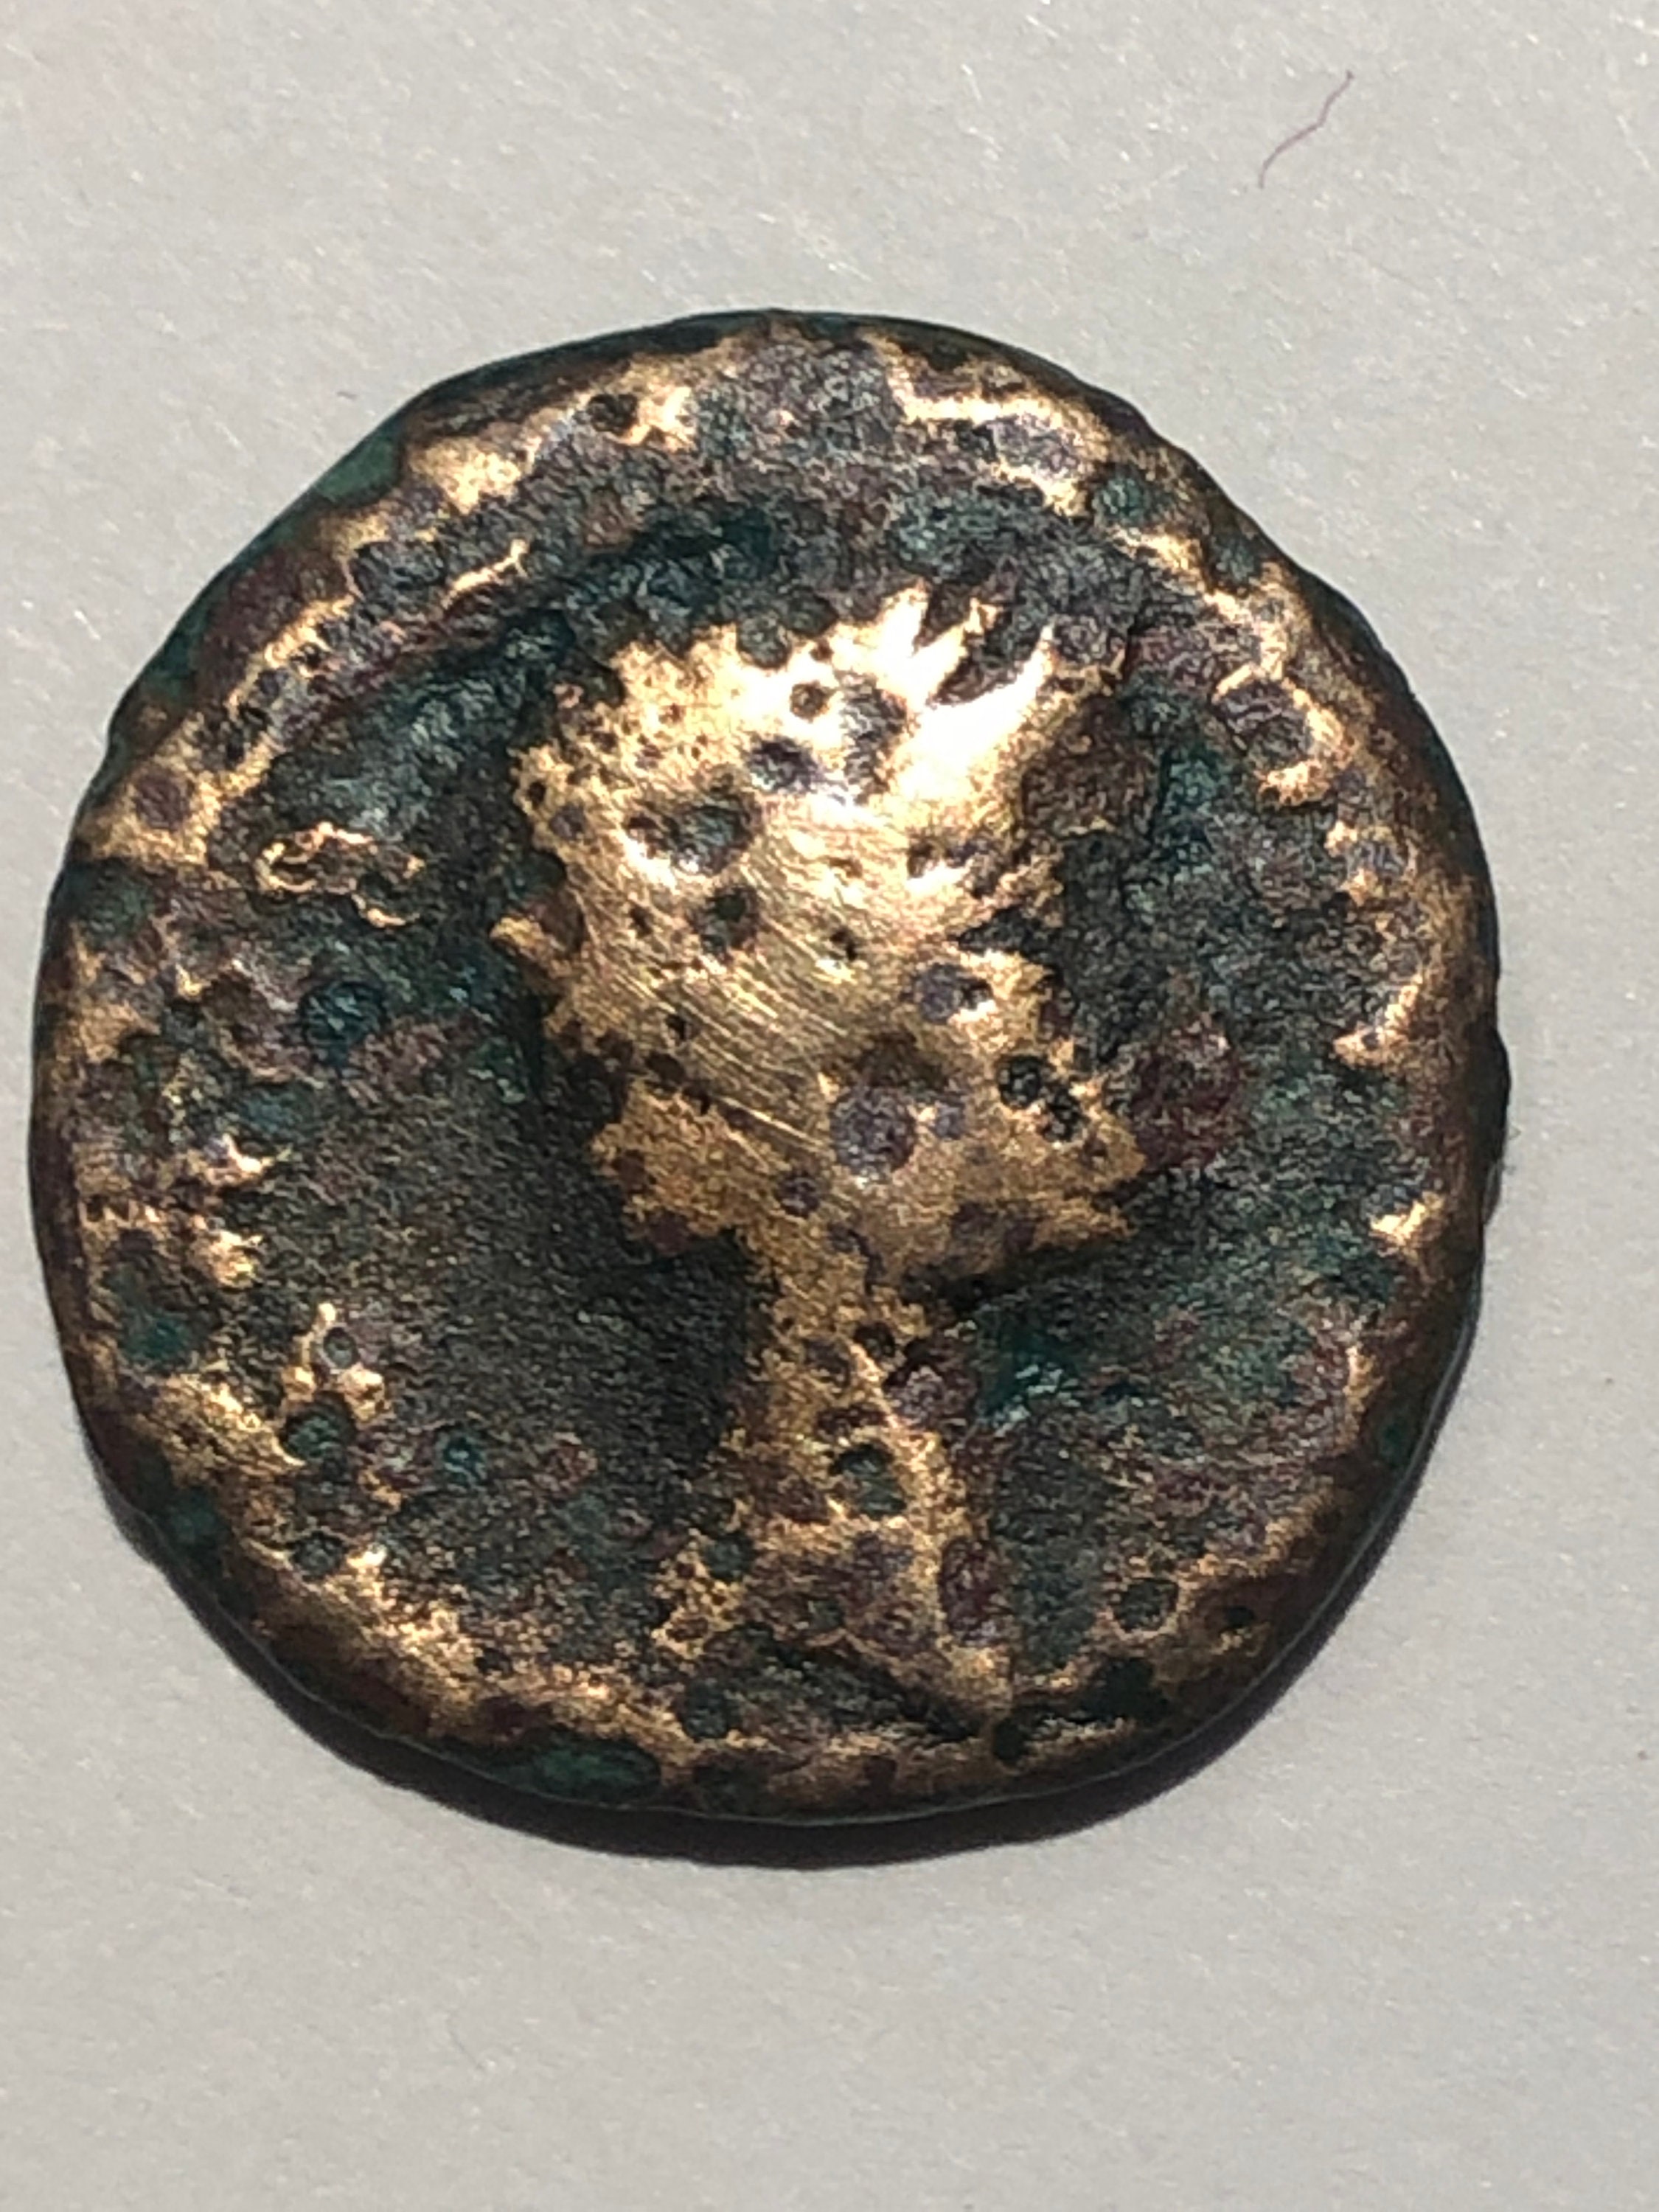 Authentic Roman Coin - Etsy